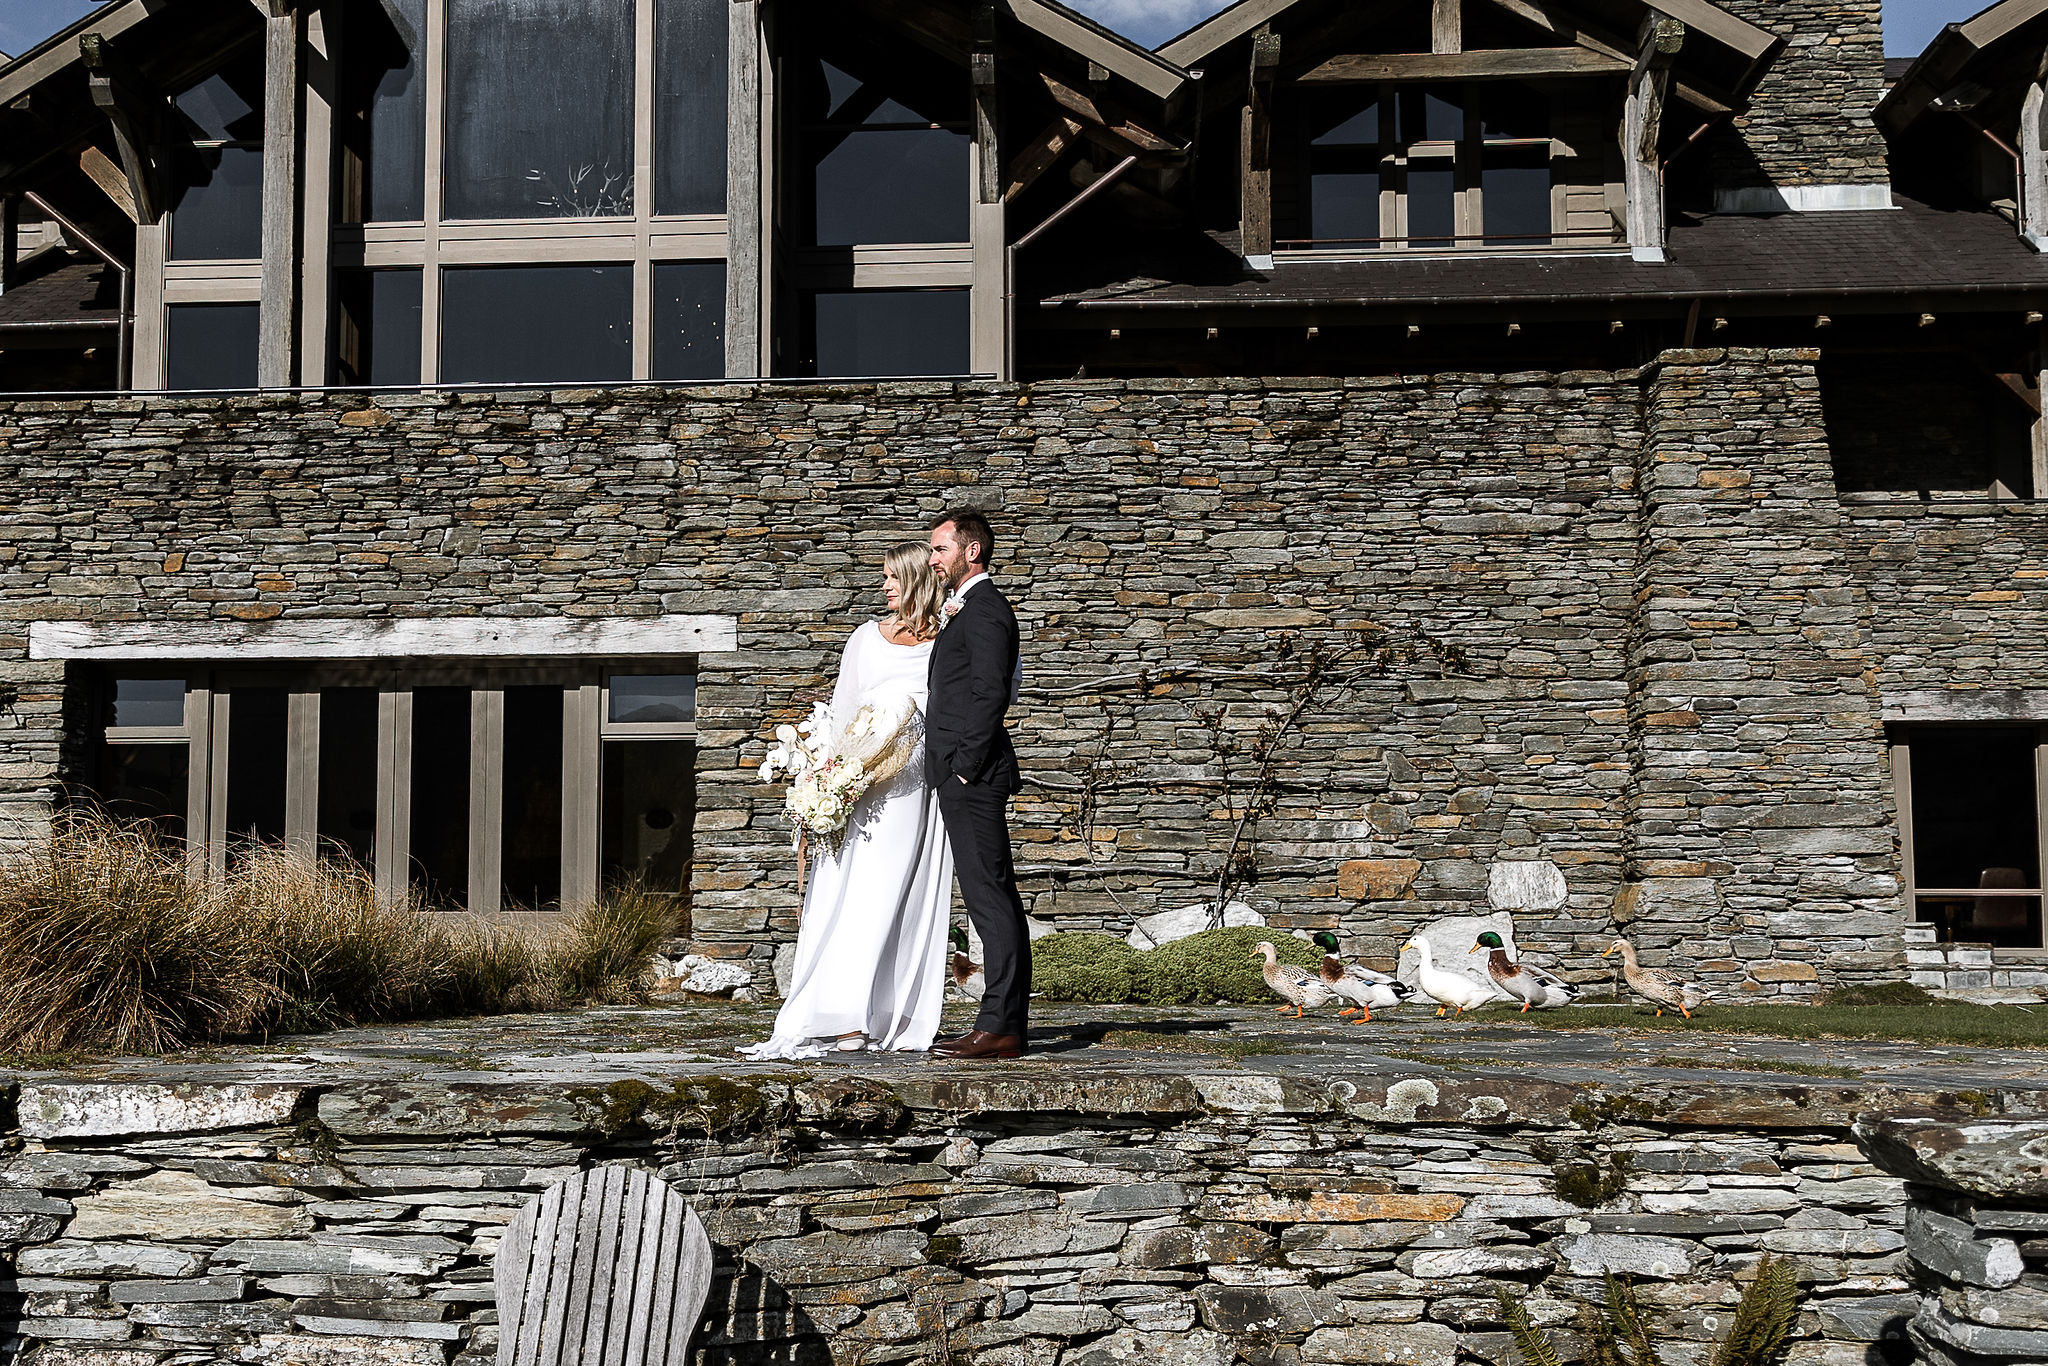 Heli Glenorchy - Blanket Bay - Wildly Romantic Weddings & Elopements